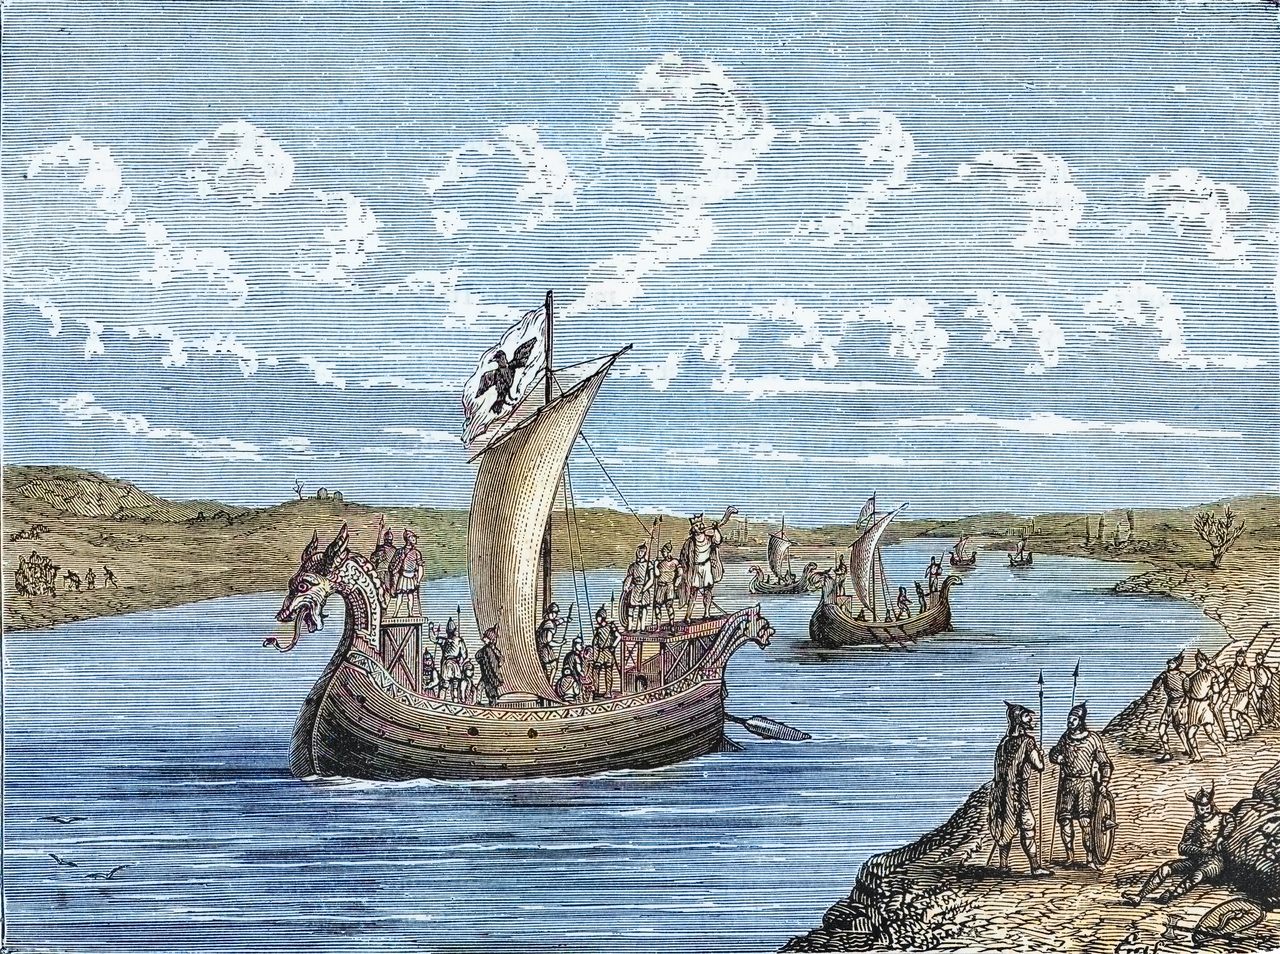 An engraving of a Viking ship.